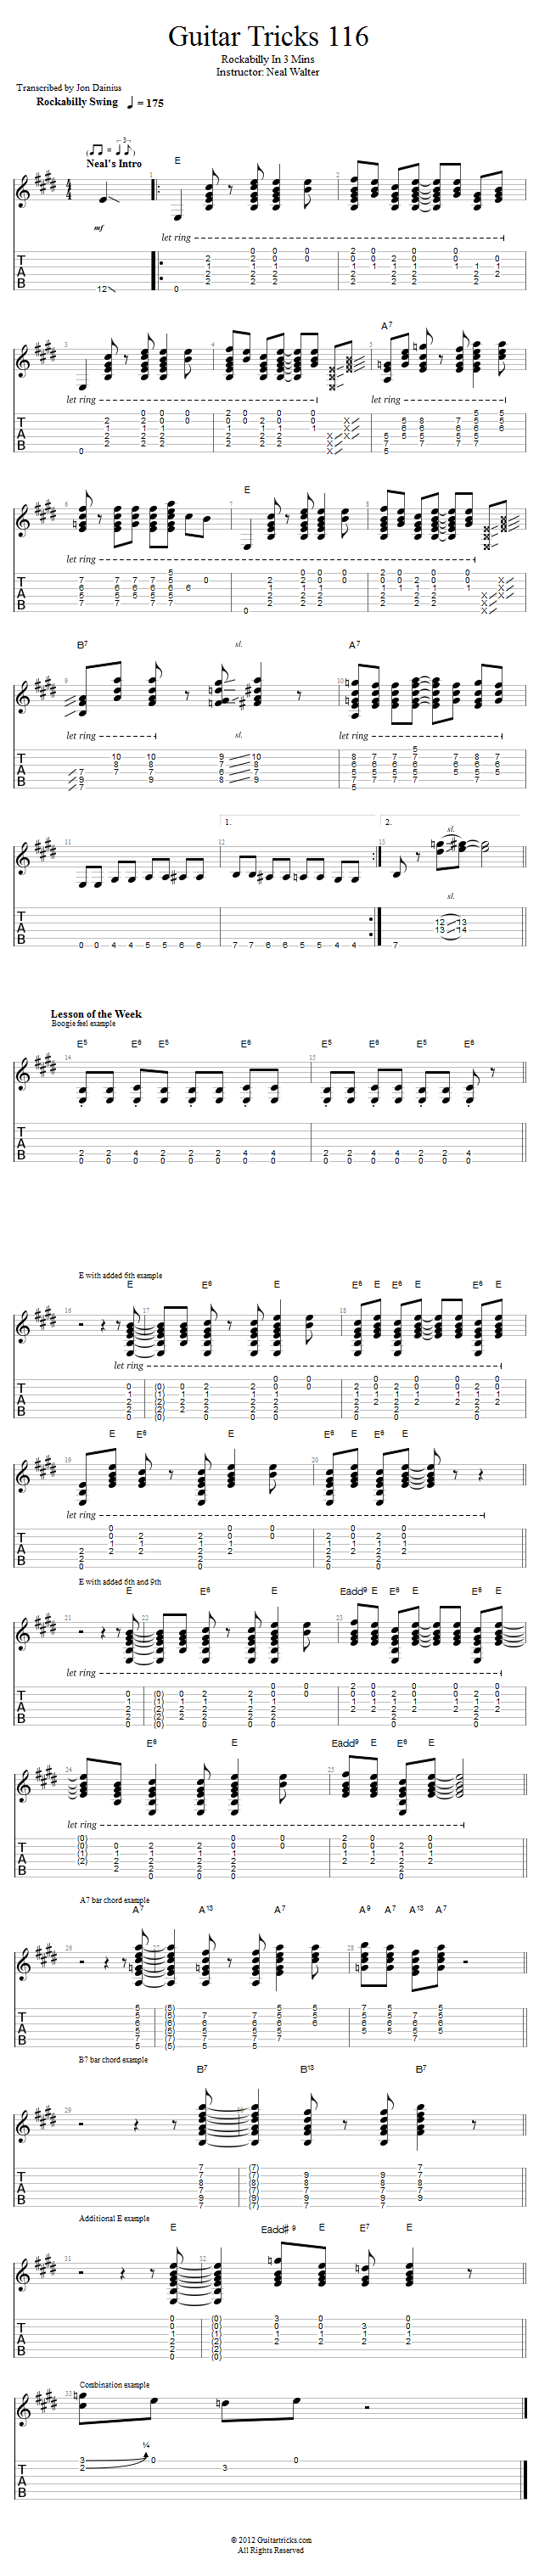 Guitar Tricks 116: Rockabilly In 3 Mins song notation